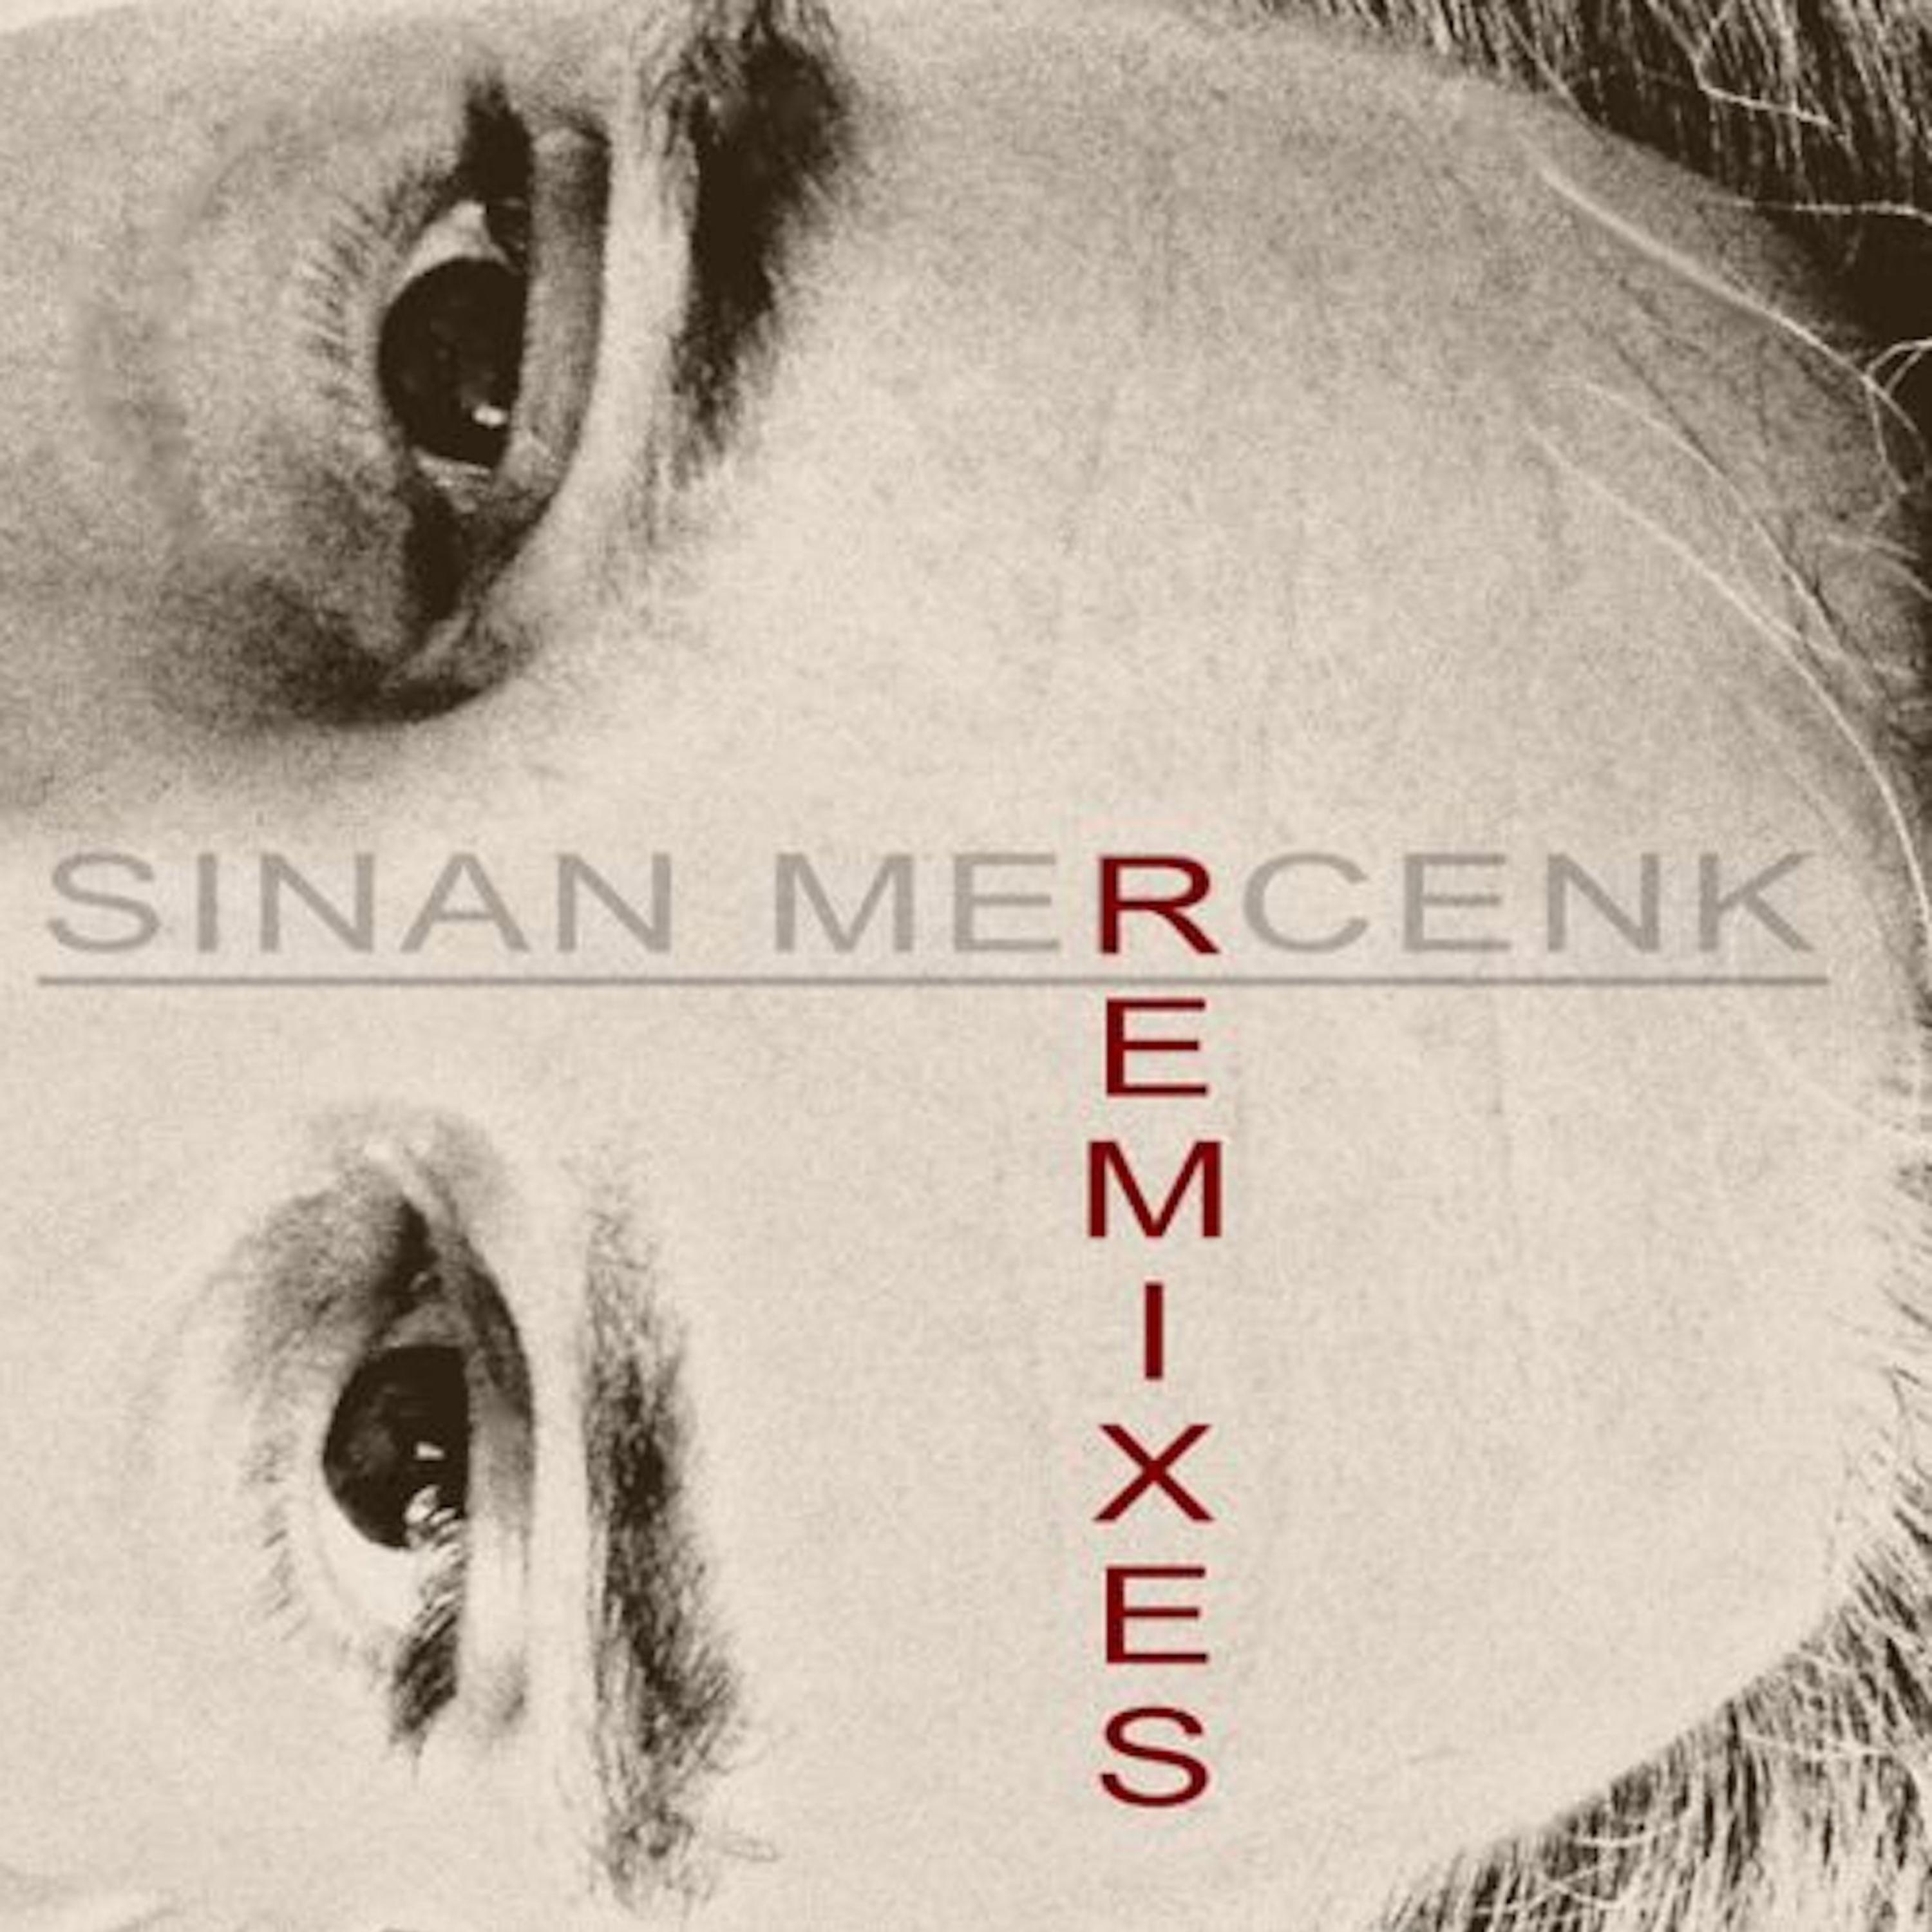 Jahreszeiten (Sinan Mercenk's Shortdub Mix)